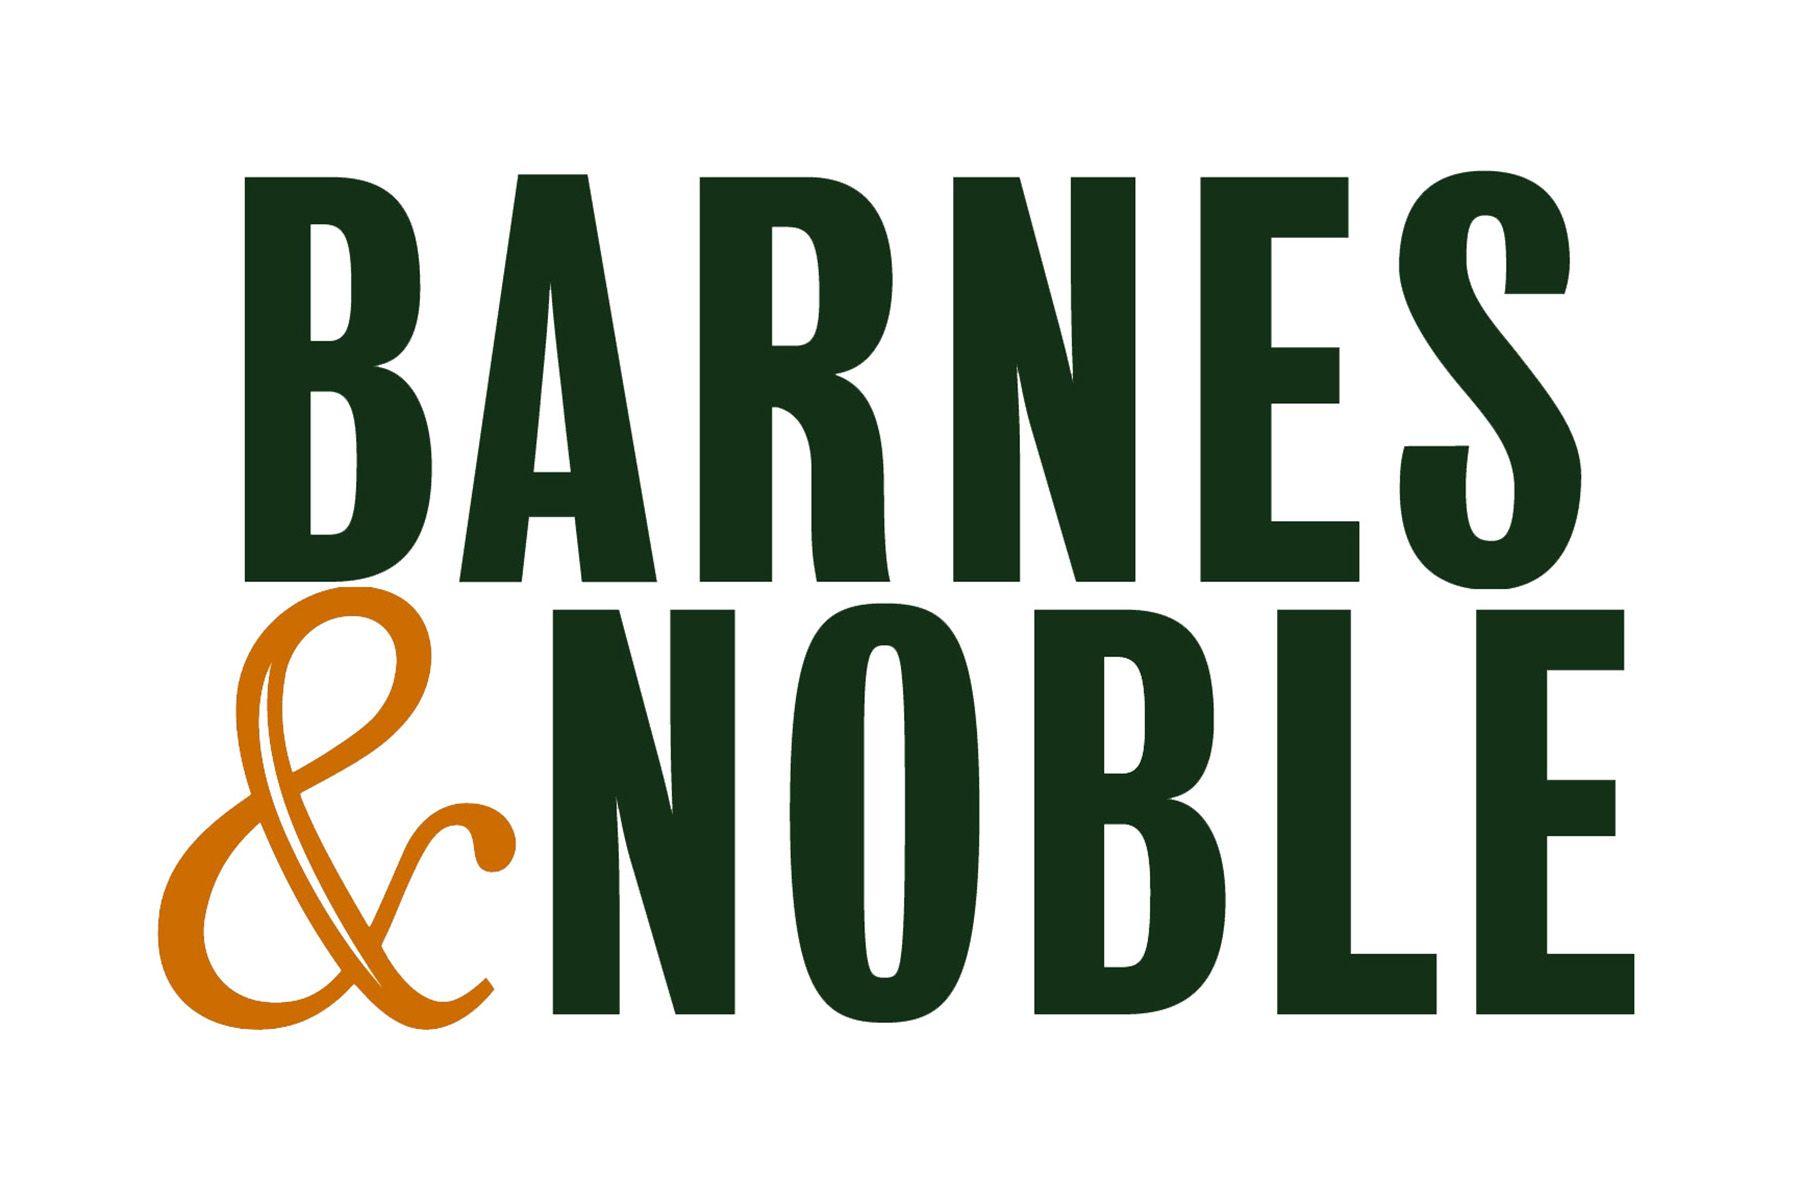 Barnesandnoble.com Logo - Barnes and noble Logos